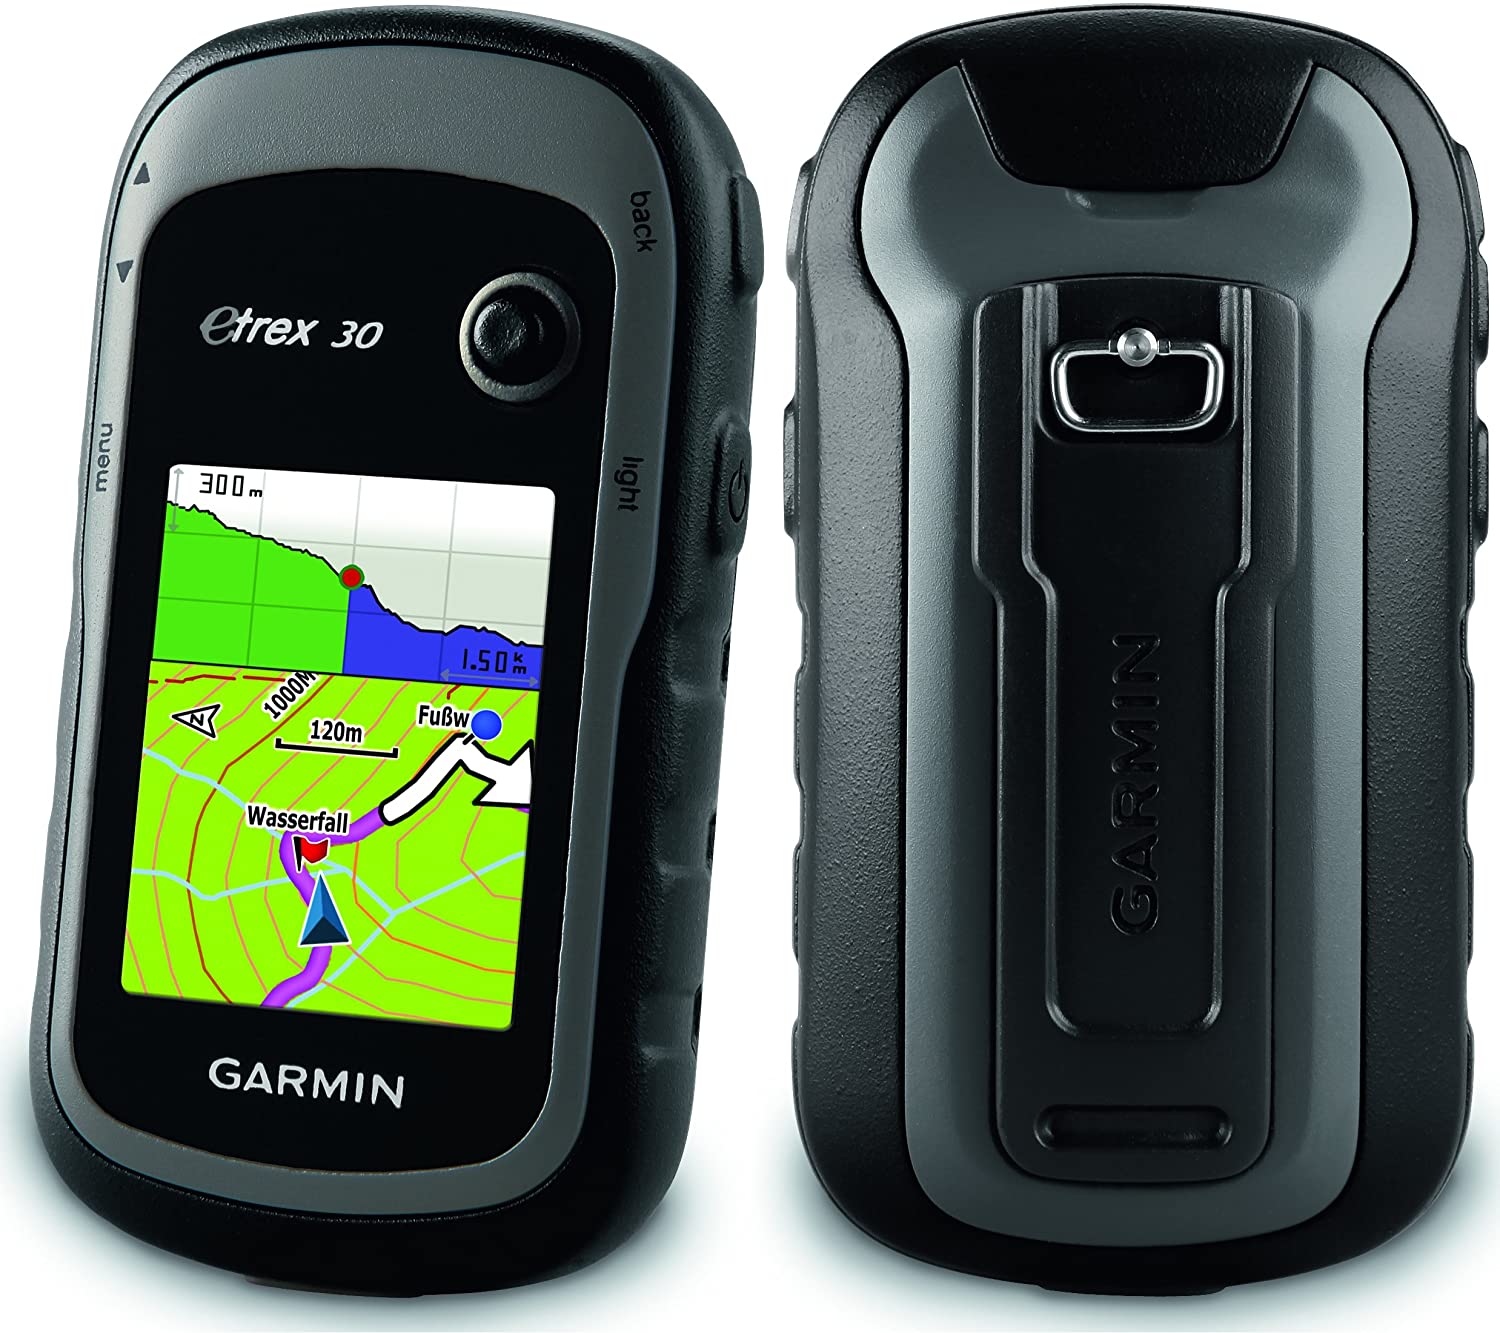 Garmin eTrex 30 Worldwide Handheld GPS Navigator review